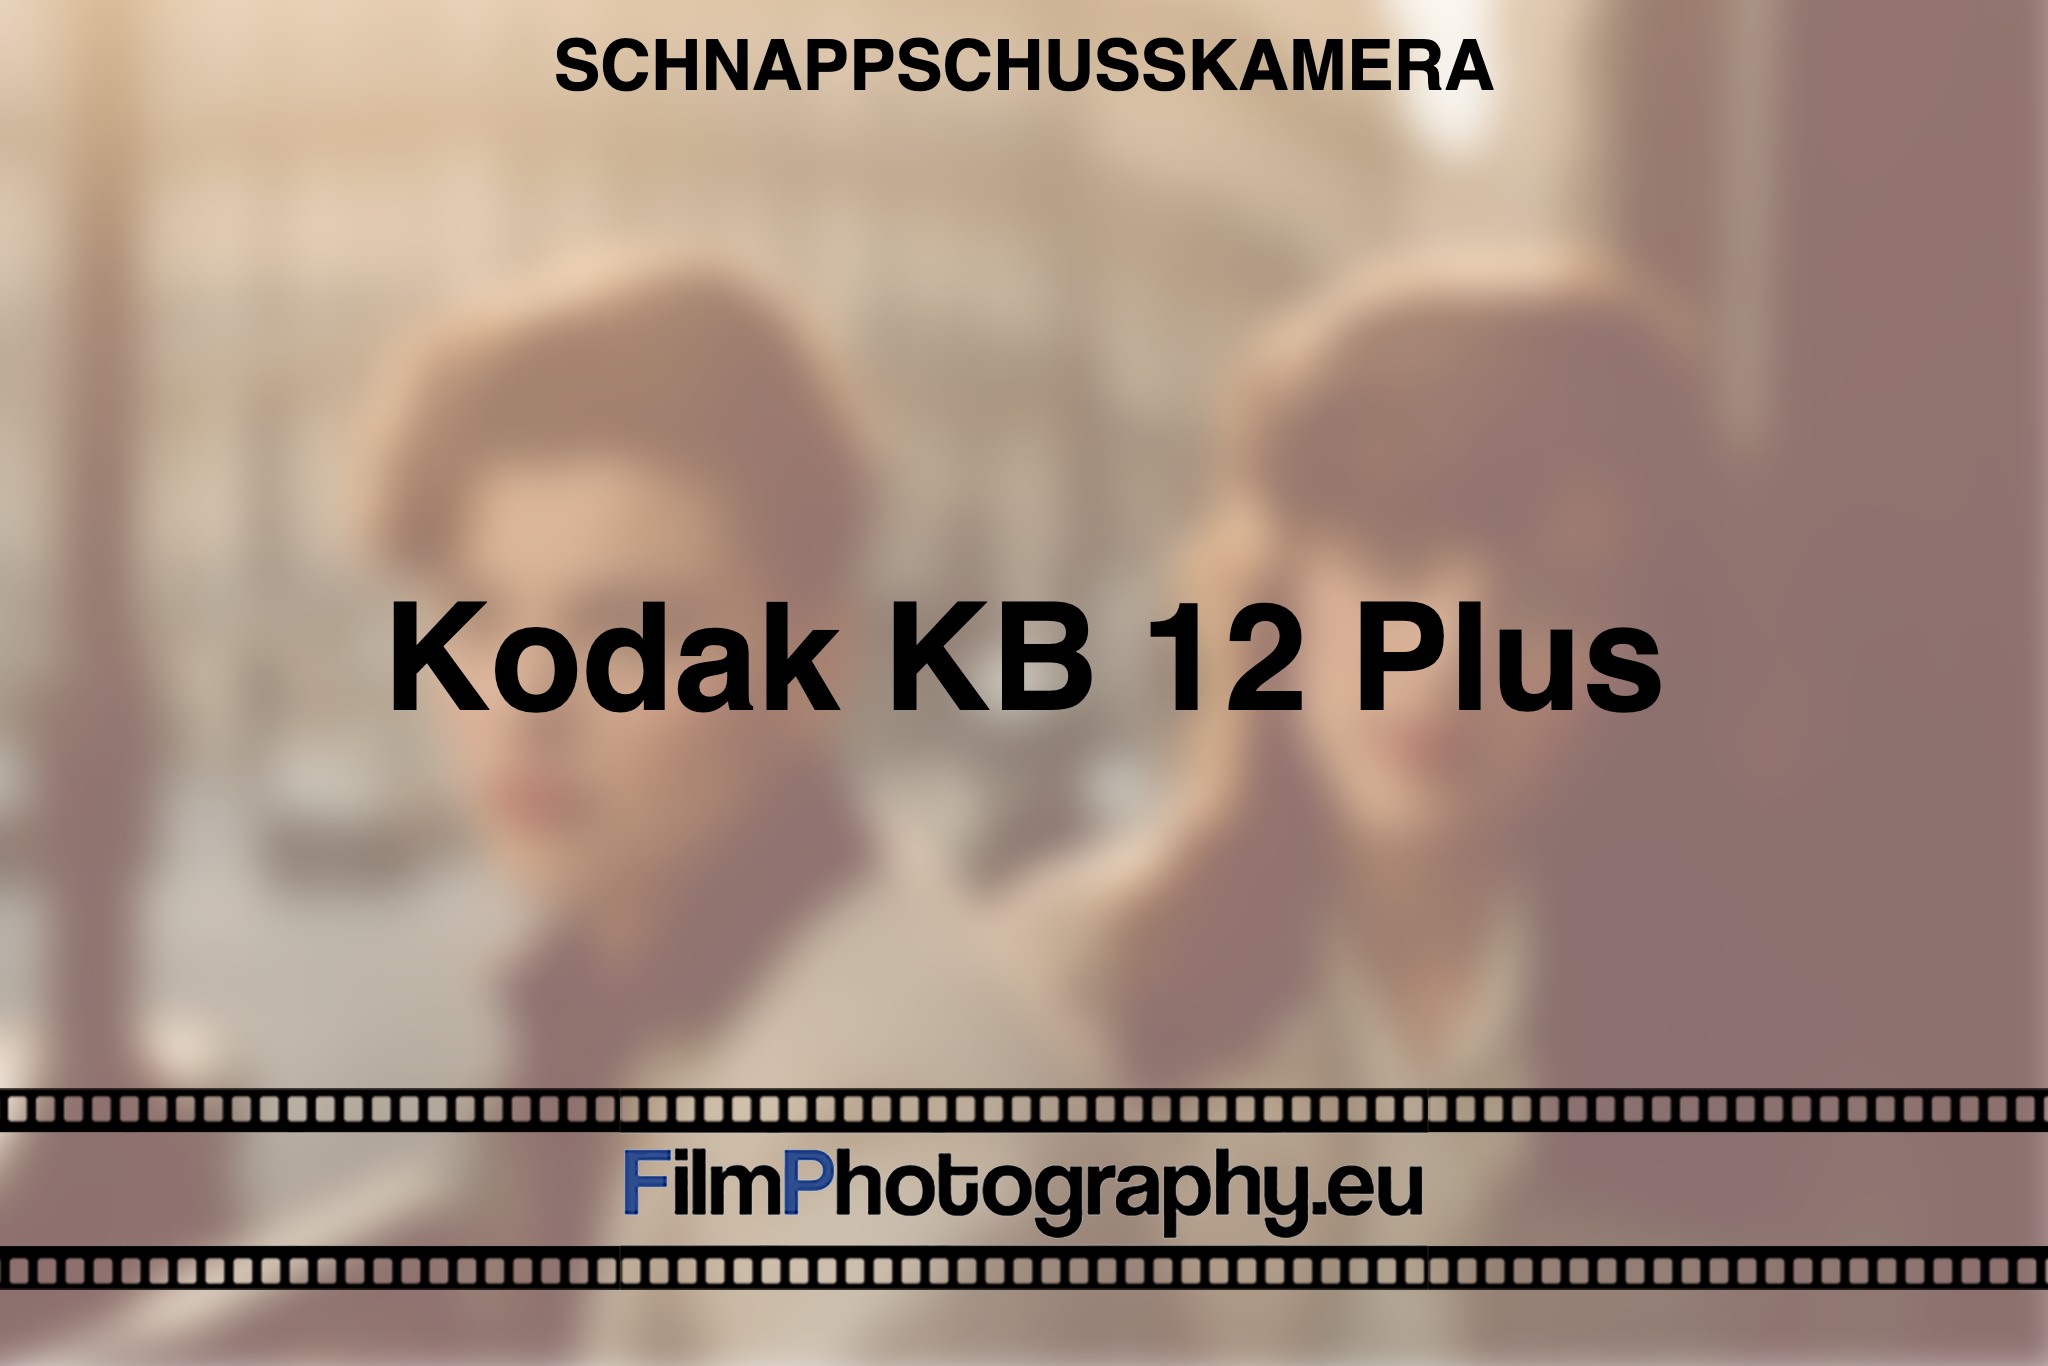 kodak-kb-12-plus-schnappschusskamera-bnv